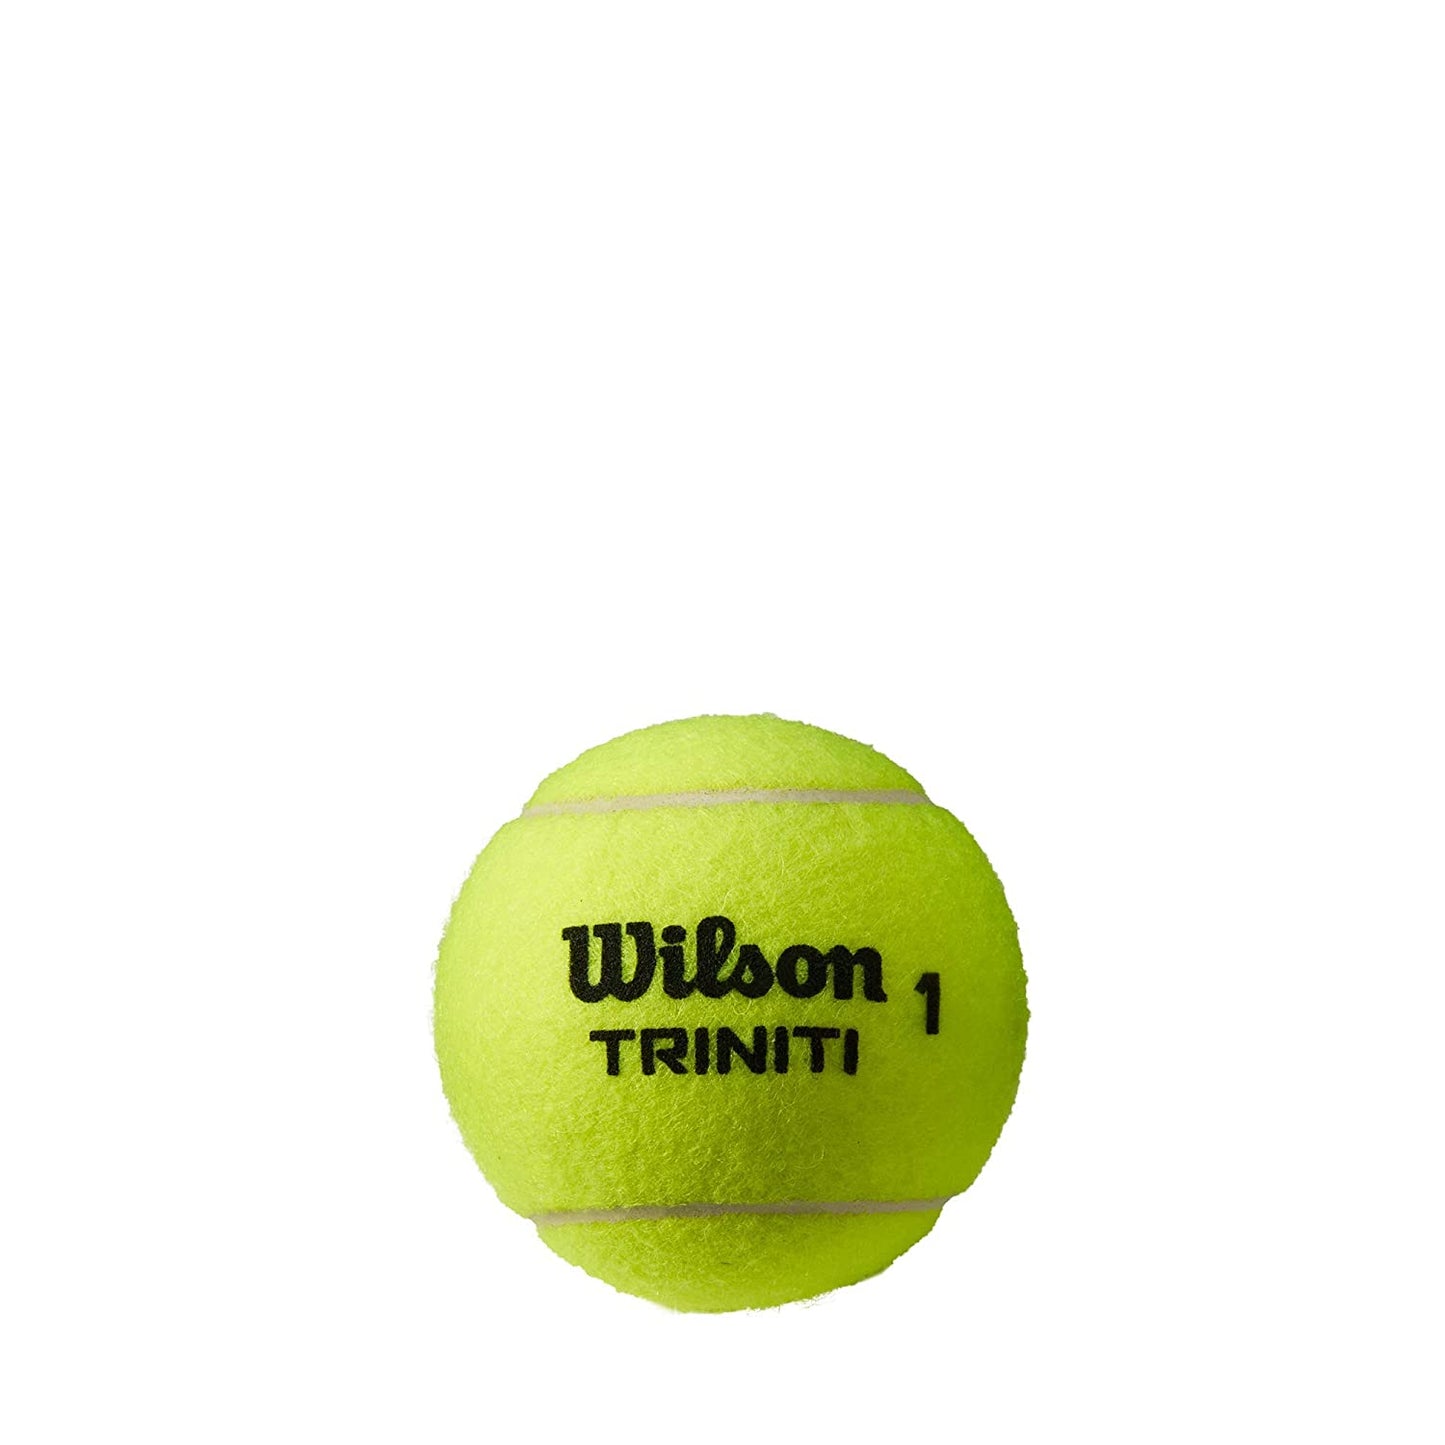 Wilson Triniti Tennis Balls - Pack of 3 Balls - Best Price online Prokicksports.com